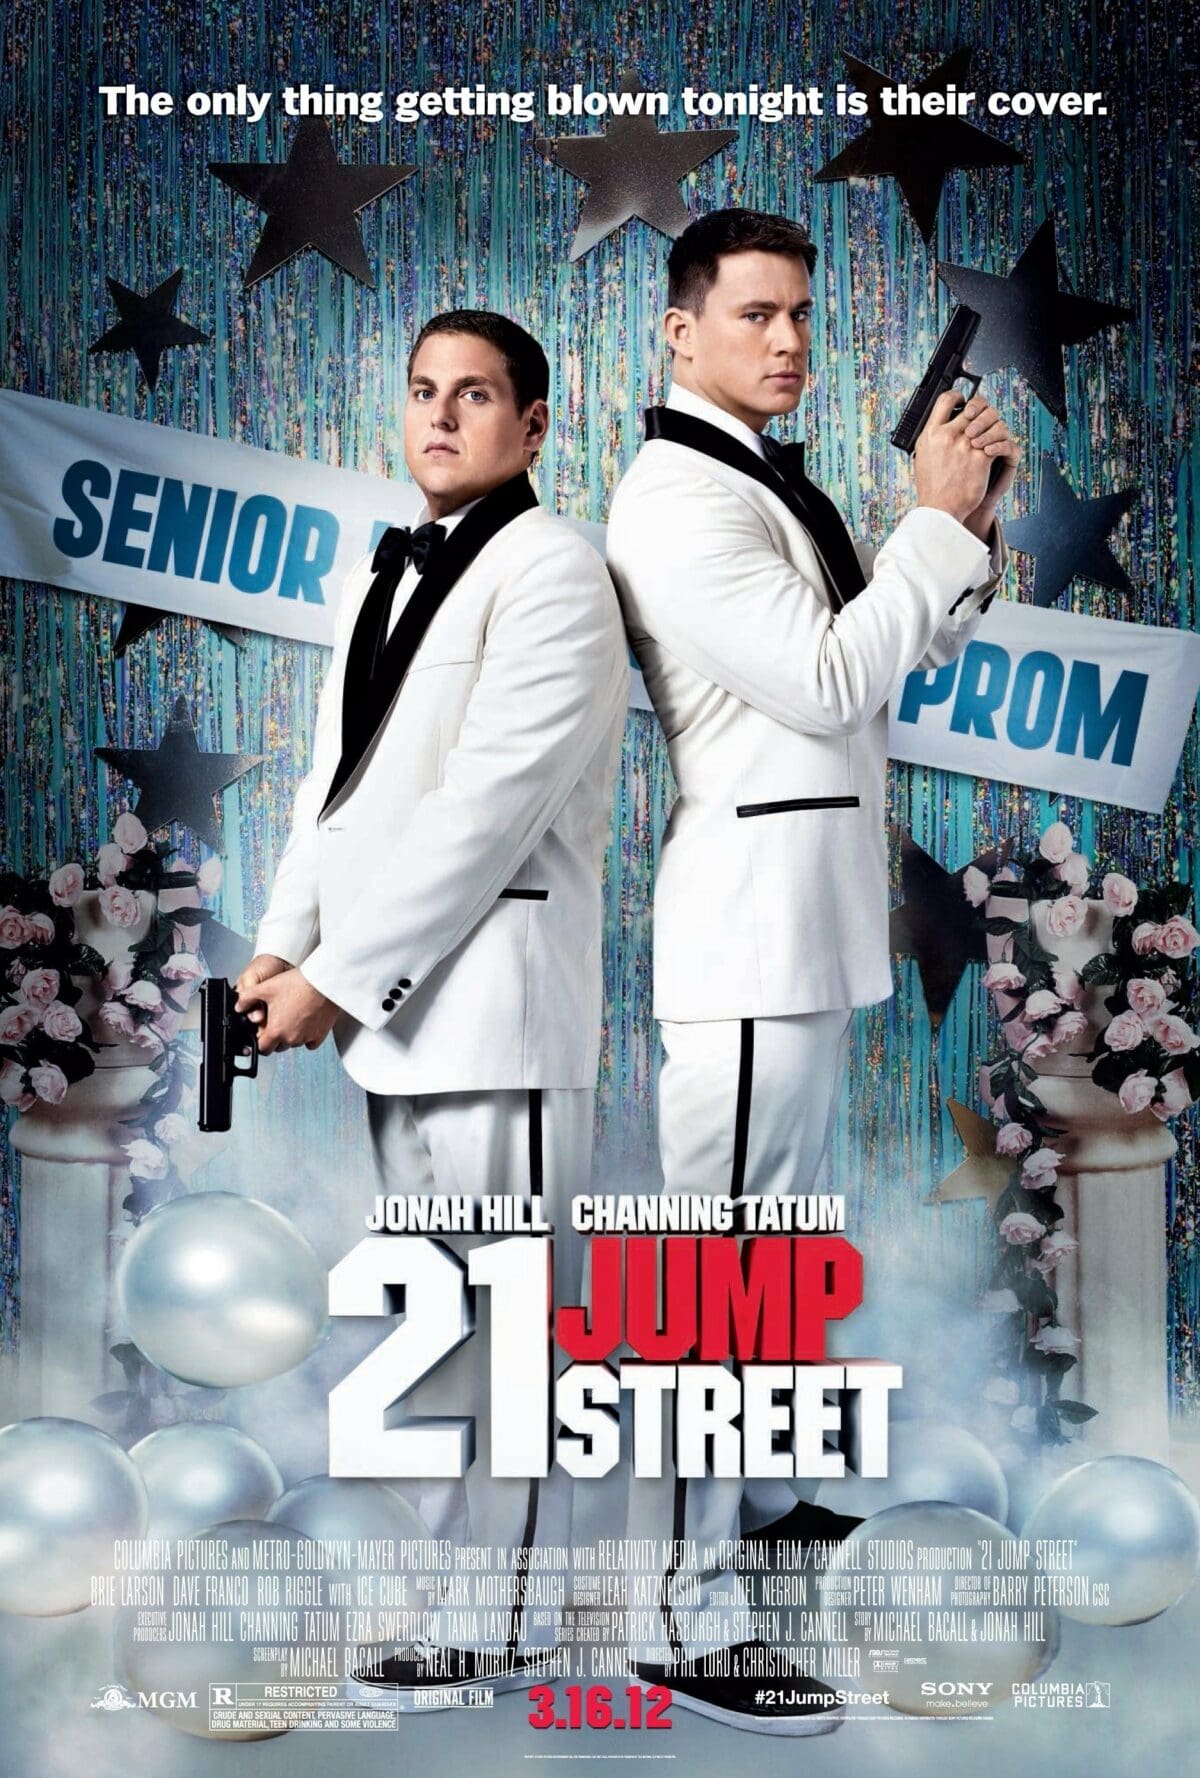 Movies Like The Hangover - 21 Jump Street